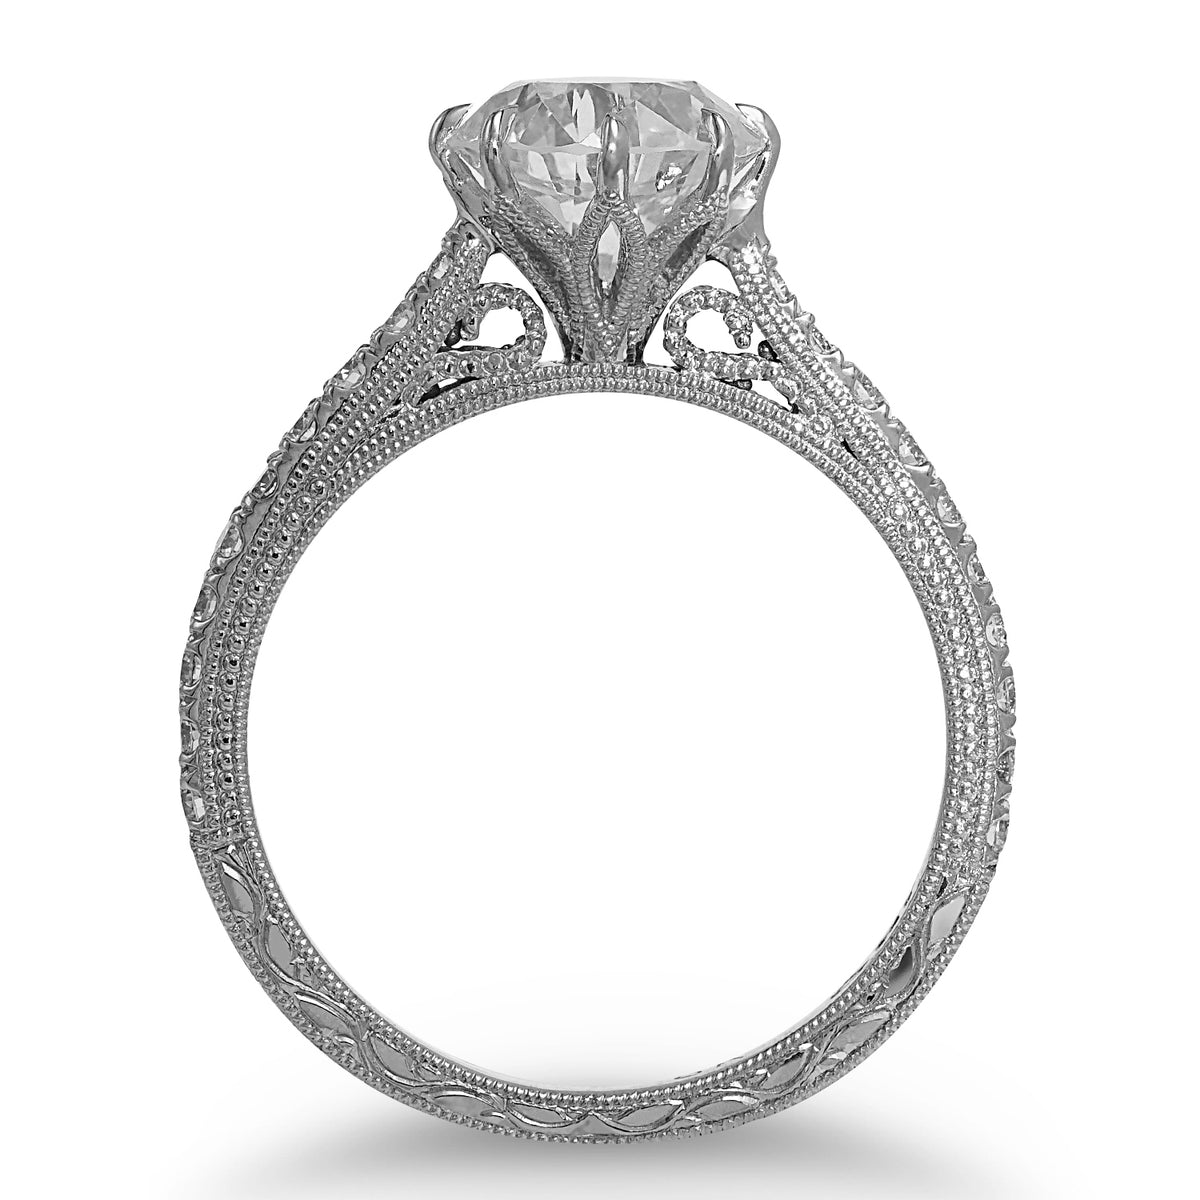 White Old European Cut Diamond in Engraved Ring